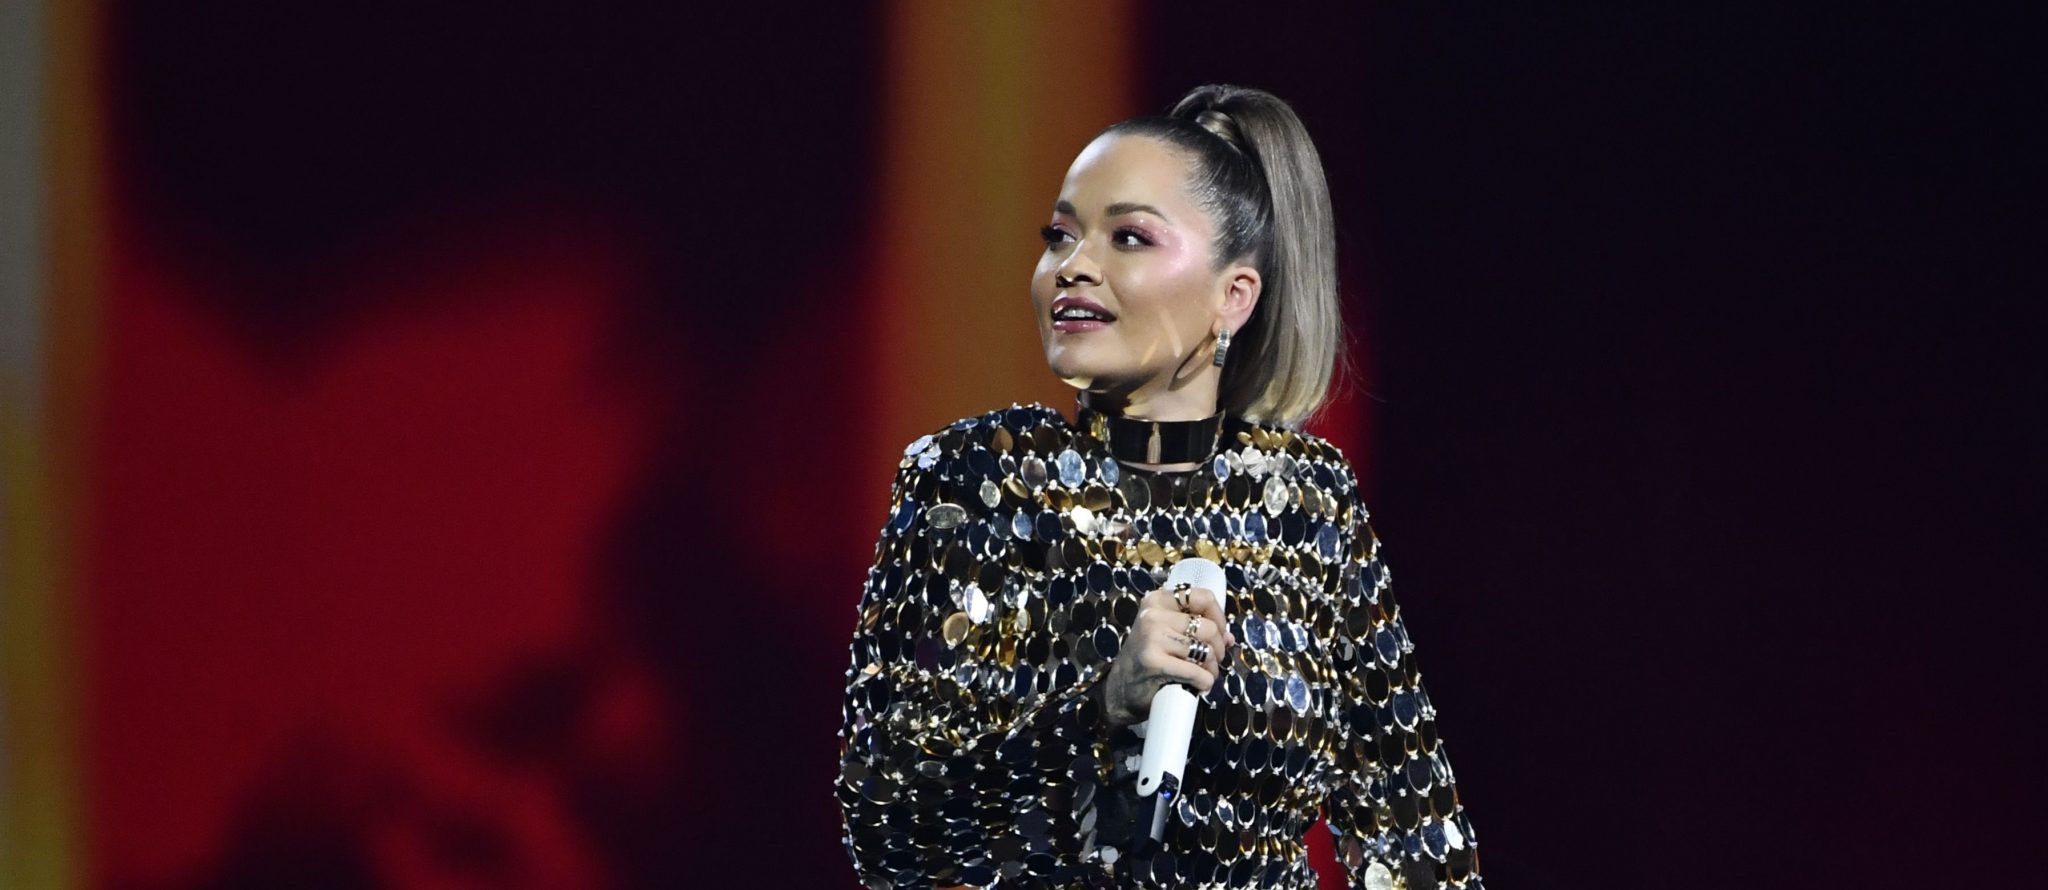 H Rita Ora τίμησε τον DJ Avicii σε συναυλία στη Στοκχόλμη